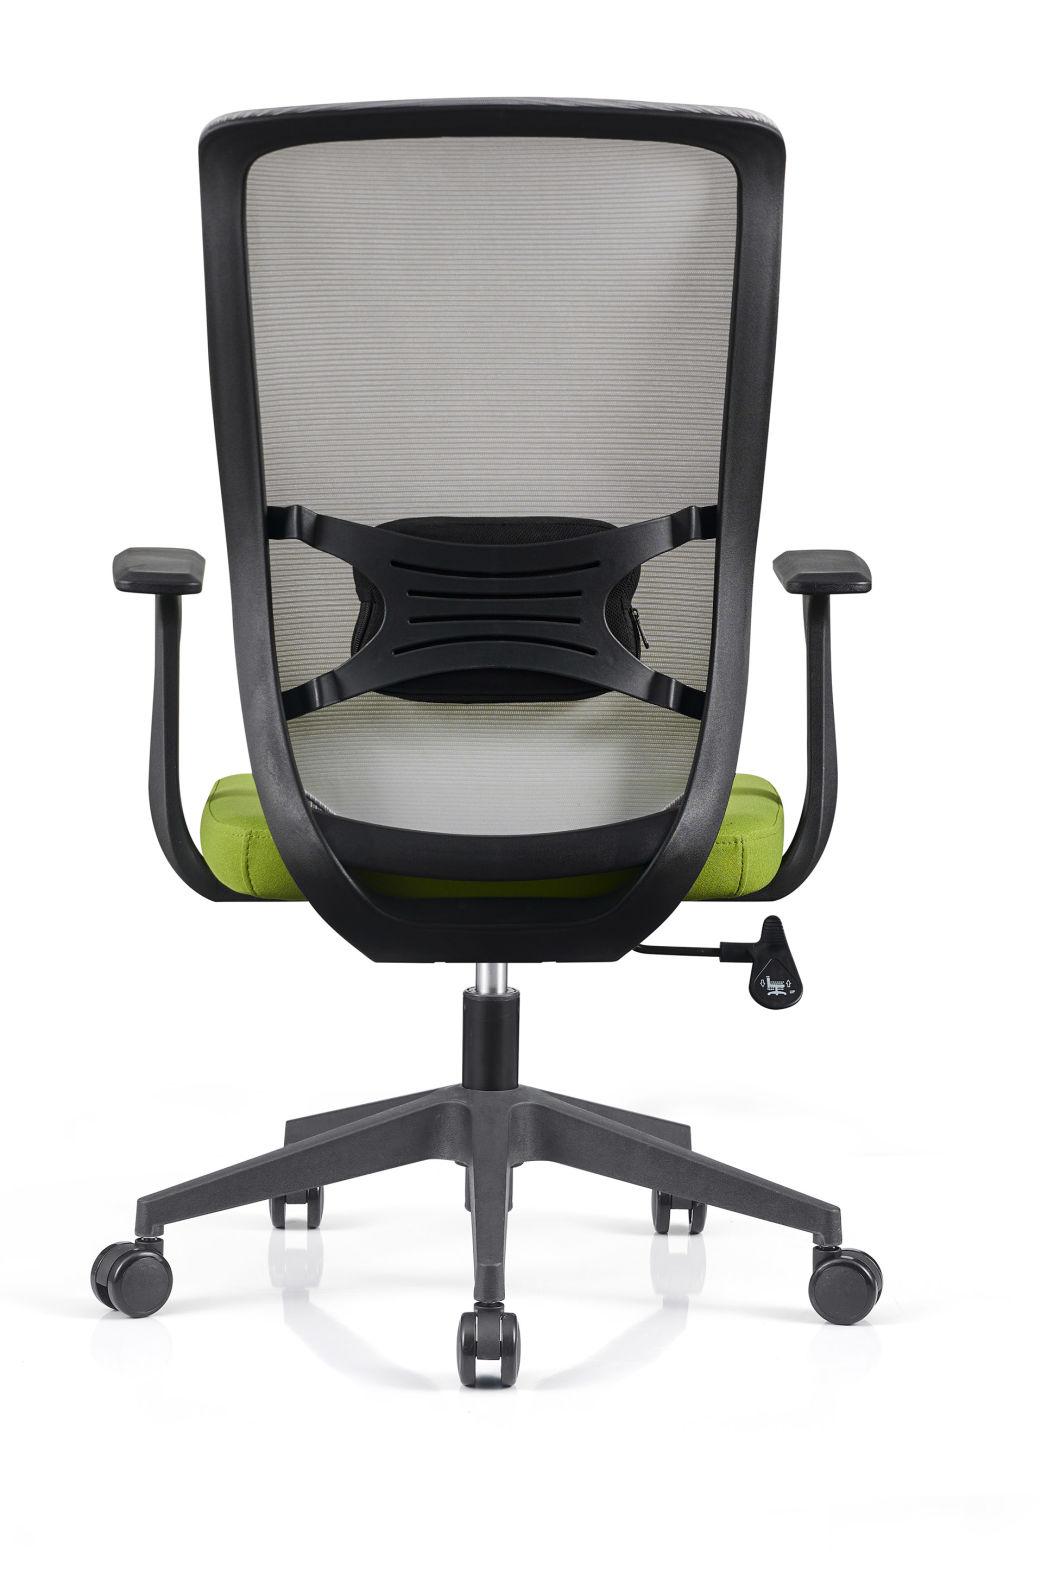 2021 Popular Cheap Office Chair Ergonomic Design Home Student Computer Chair